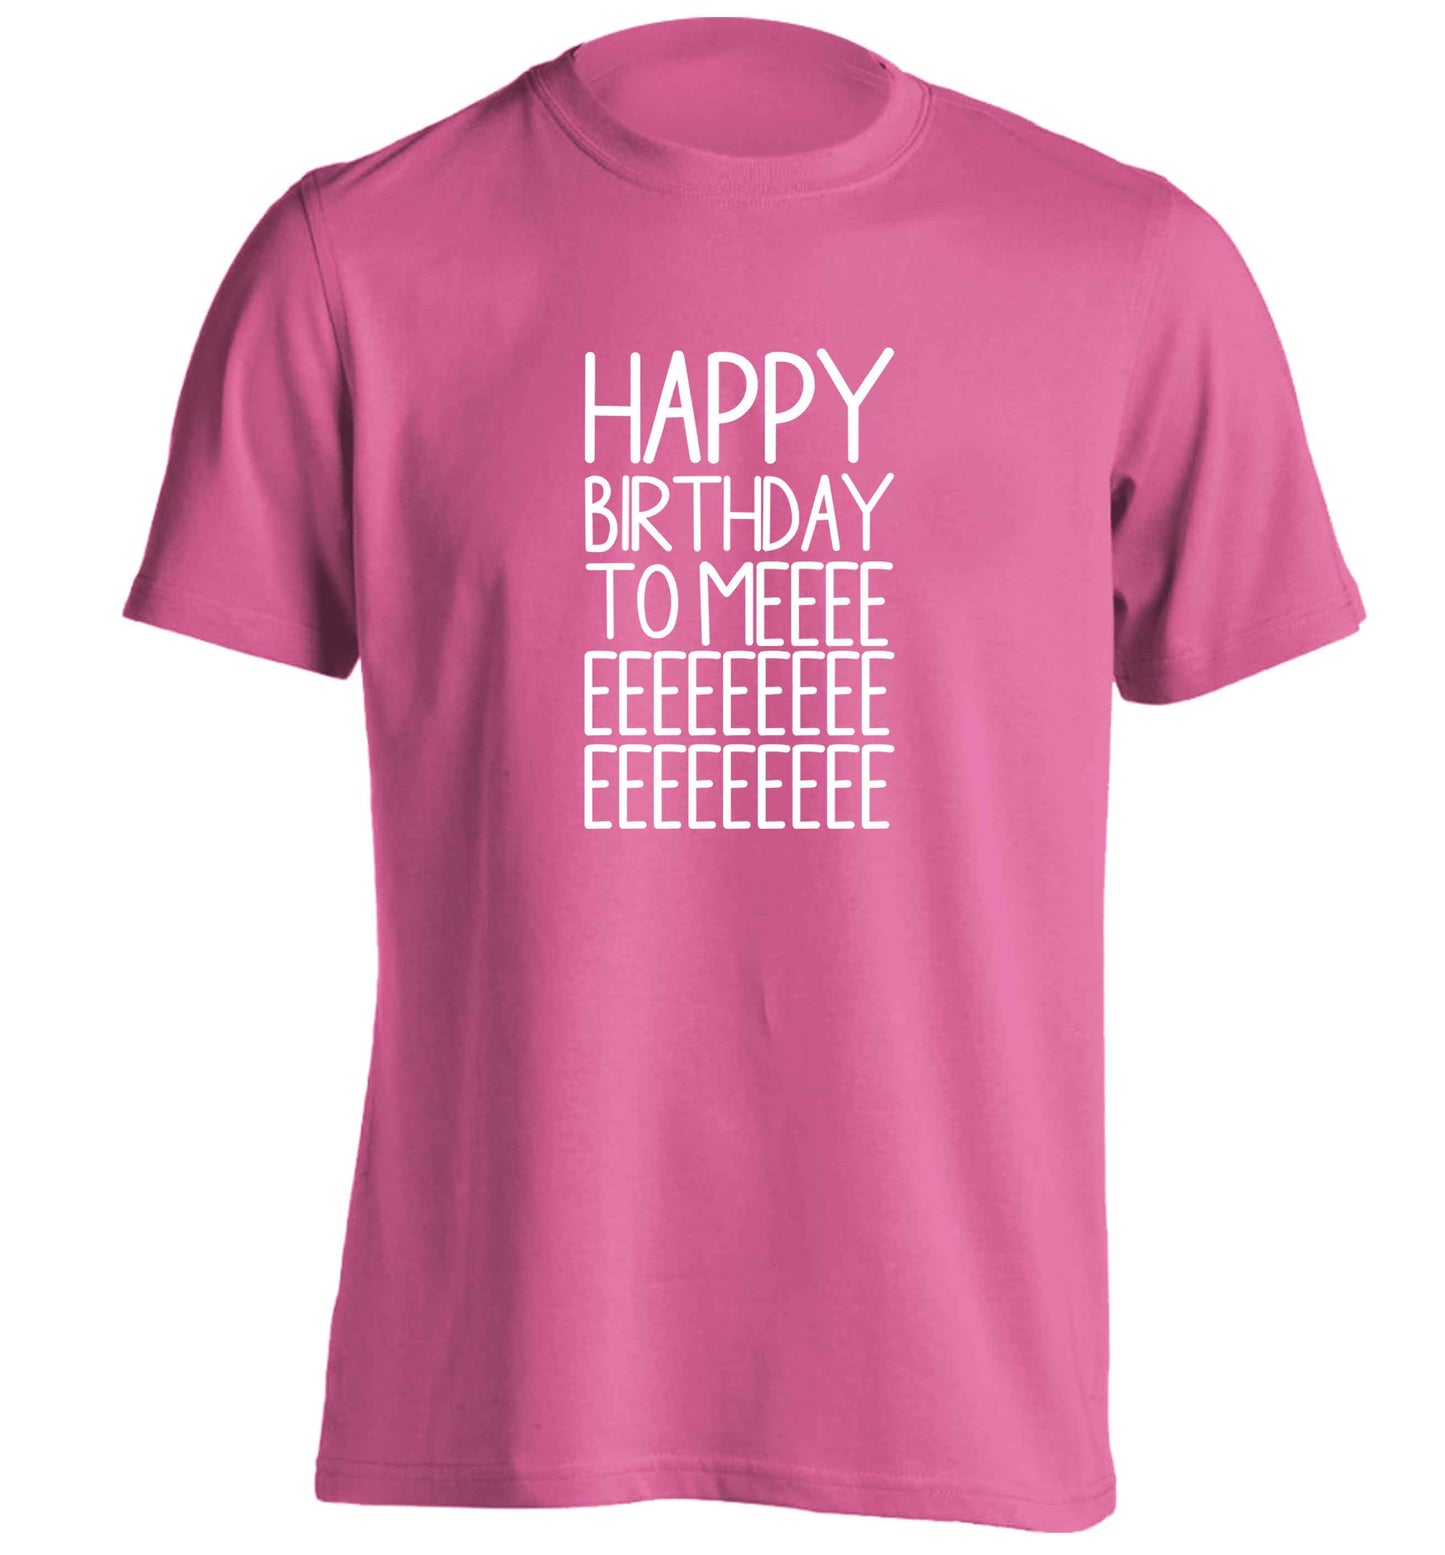 Happy birthday to me adults unisex pink Tshirt 2XL